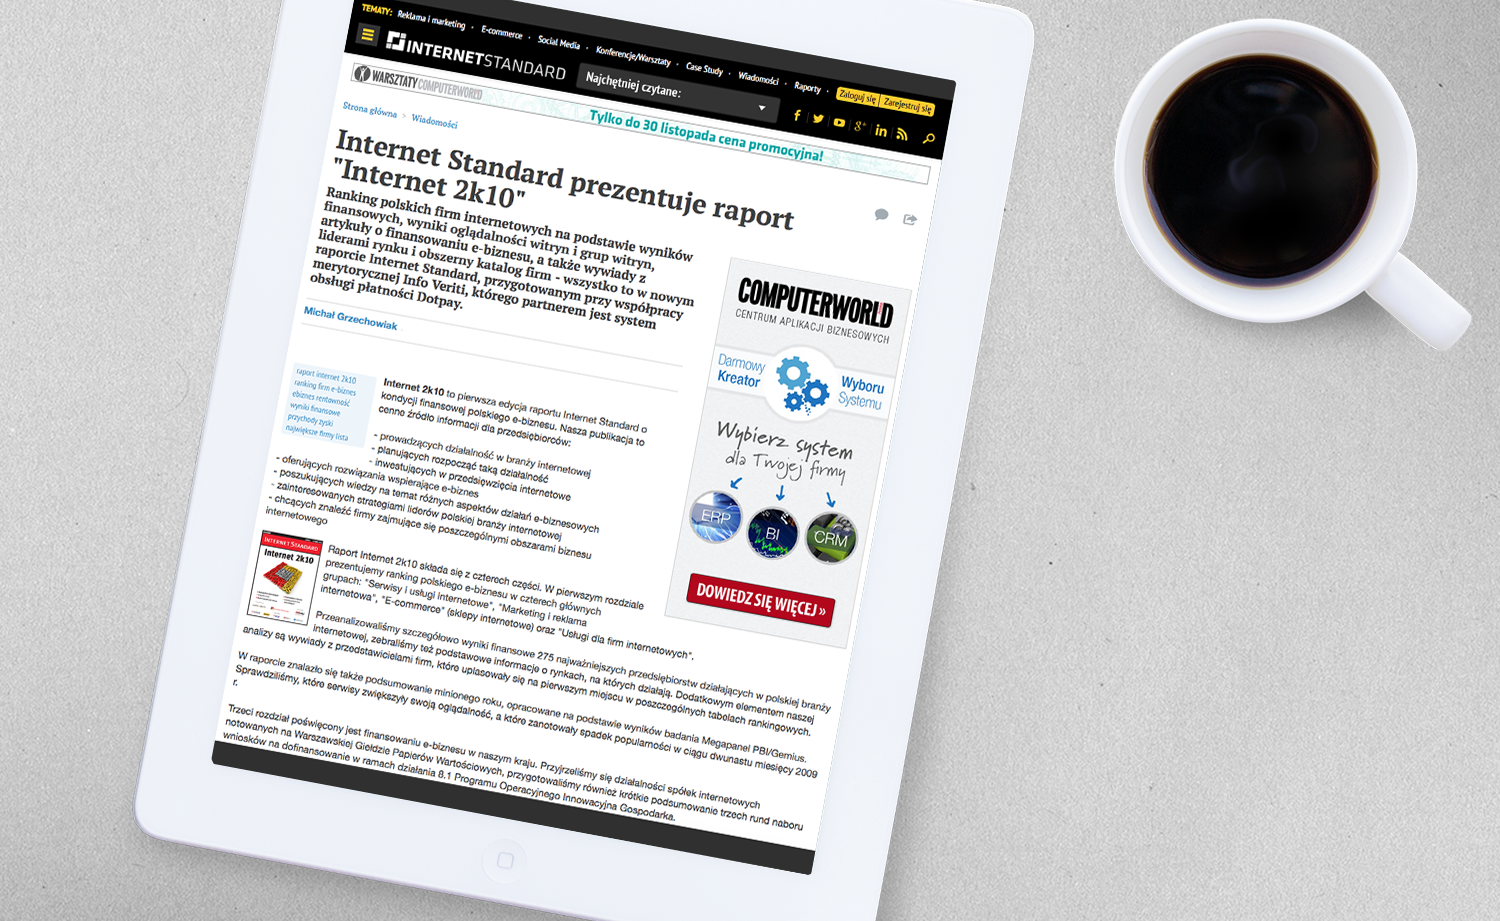 Internet Standard summary report 2010 – Internet 2k10